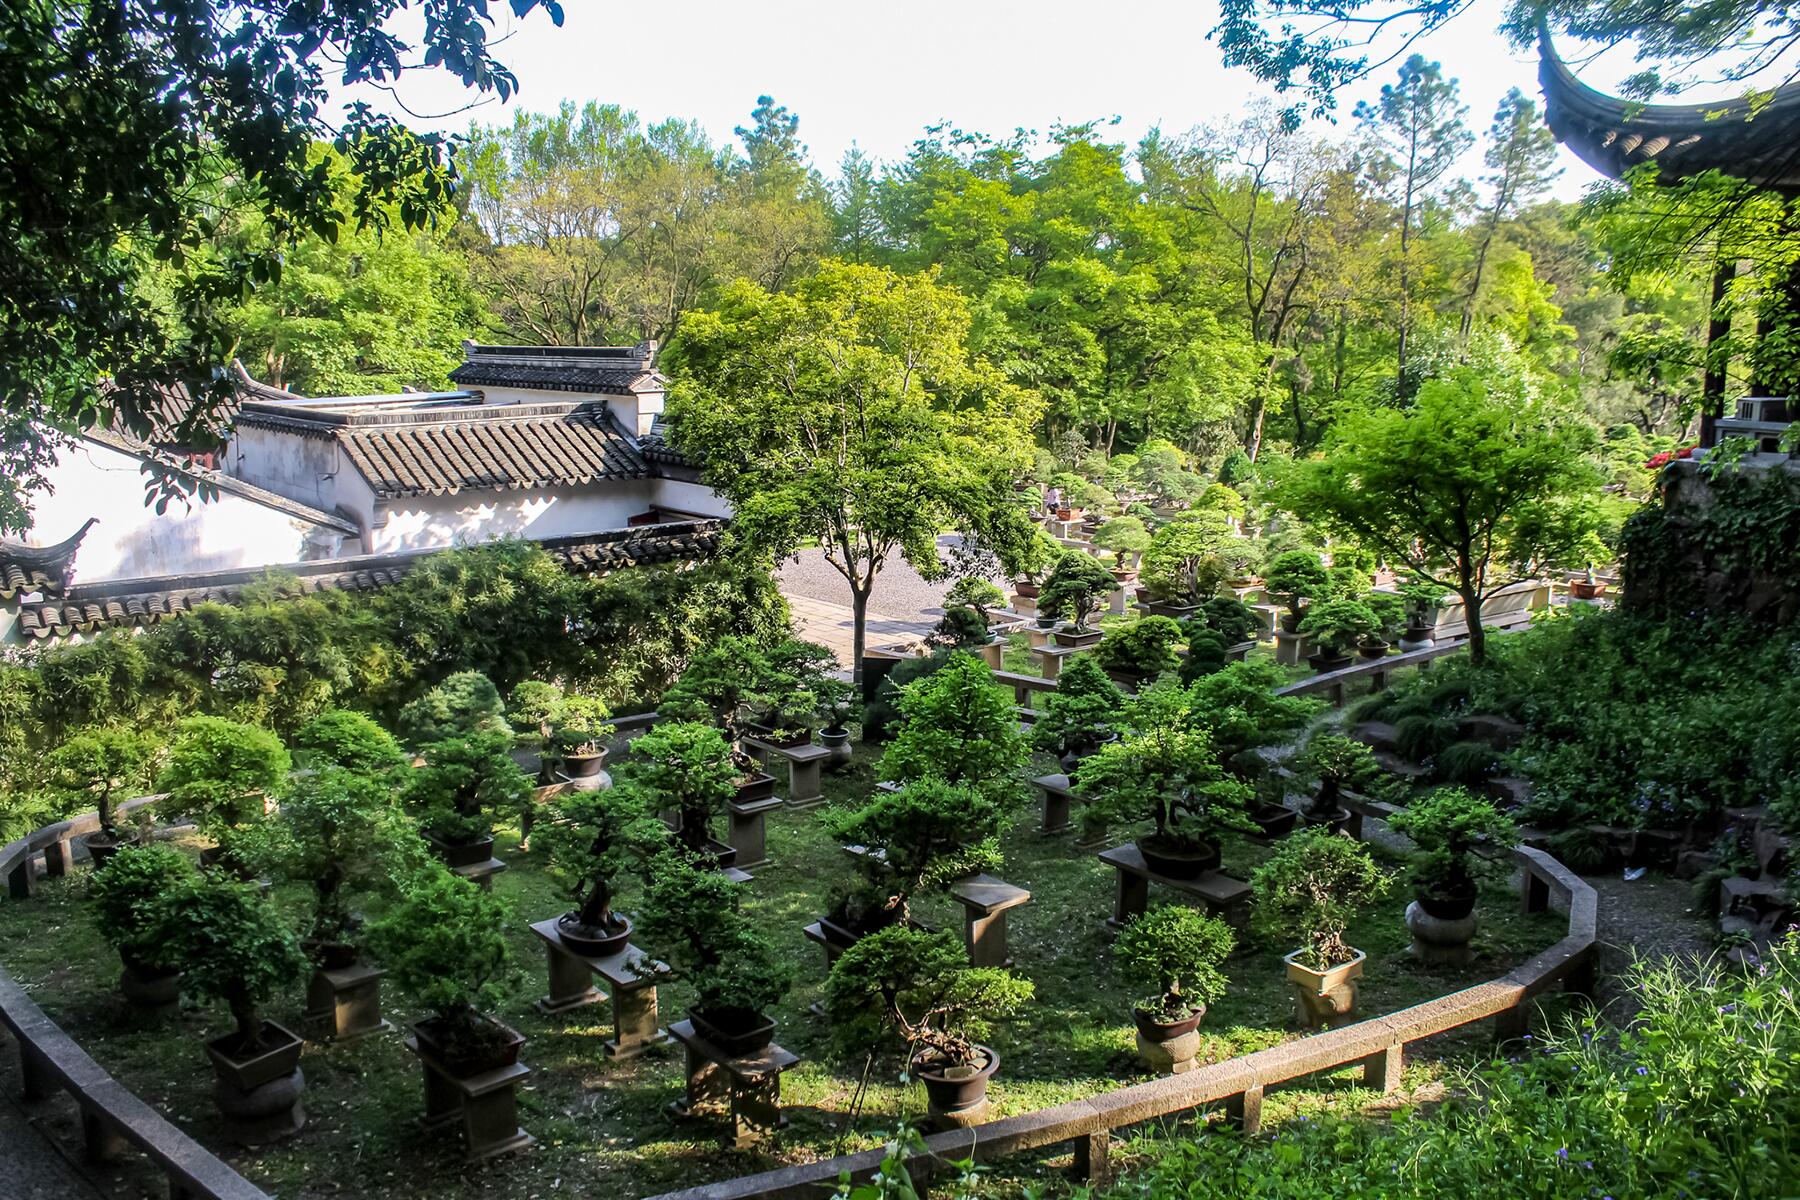 photo 3 - credit dana givens- gardens of suzhou